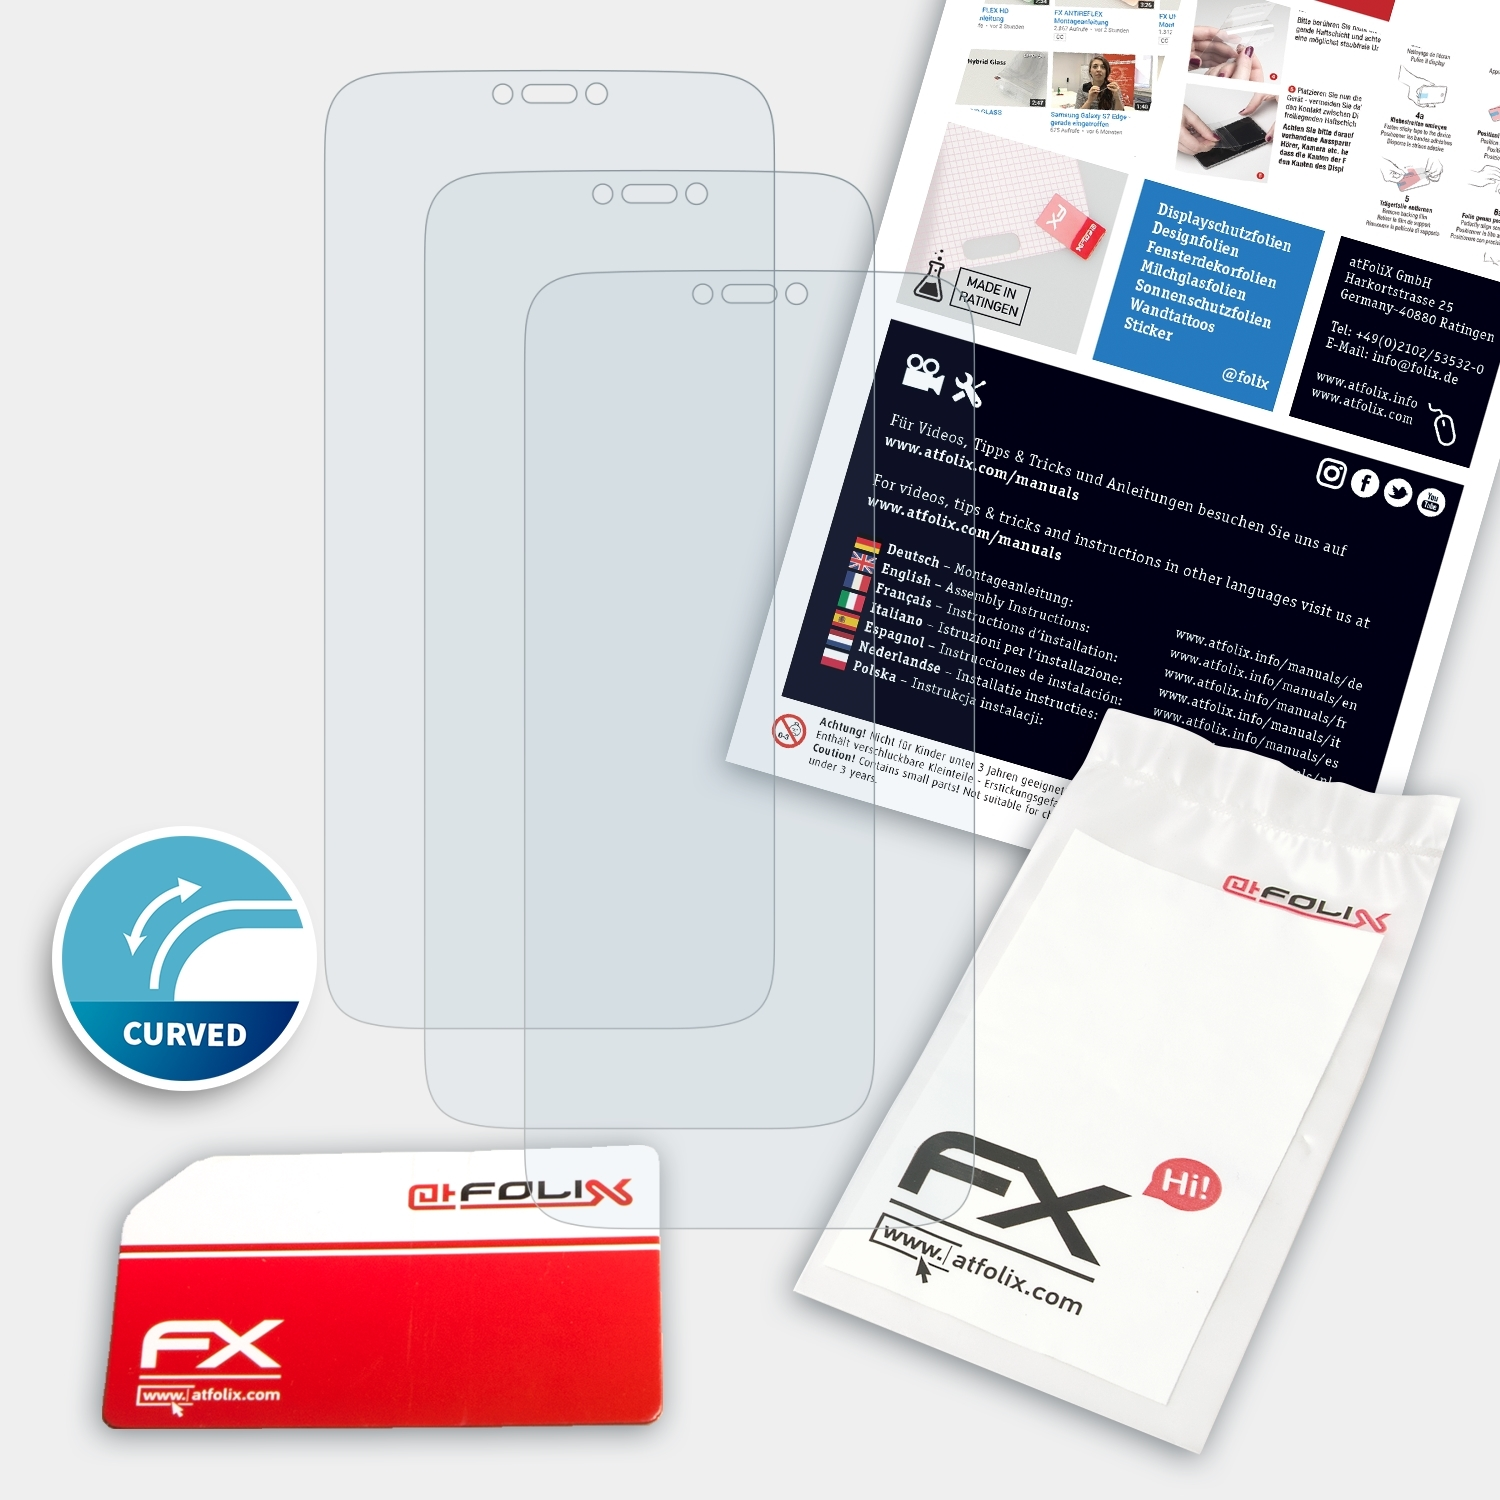 ATFOLIX 3x Power) G7 FX-ActiFleX Moto Displayschutz(für Motorola Lenovo